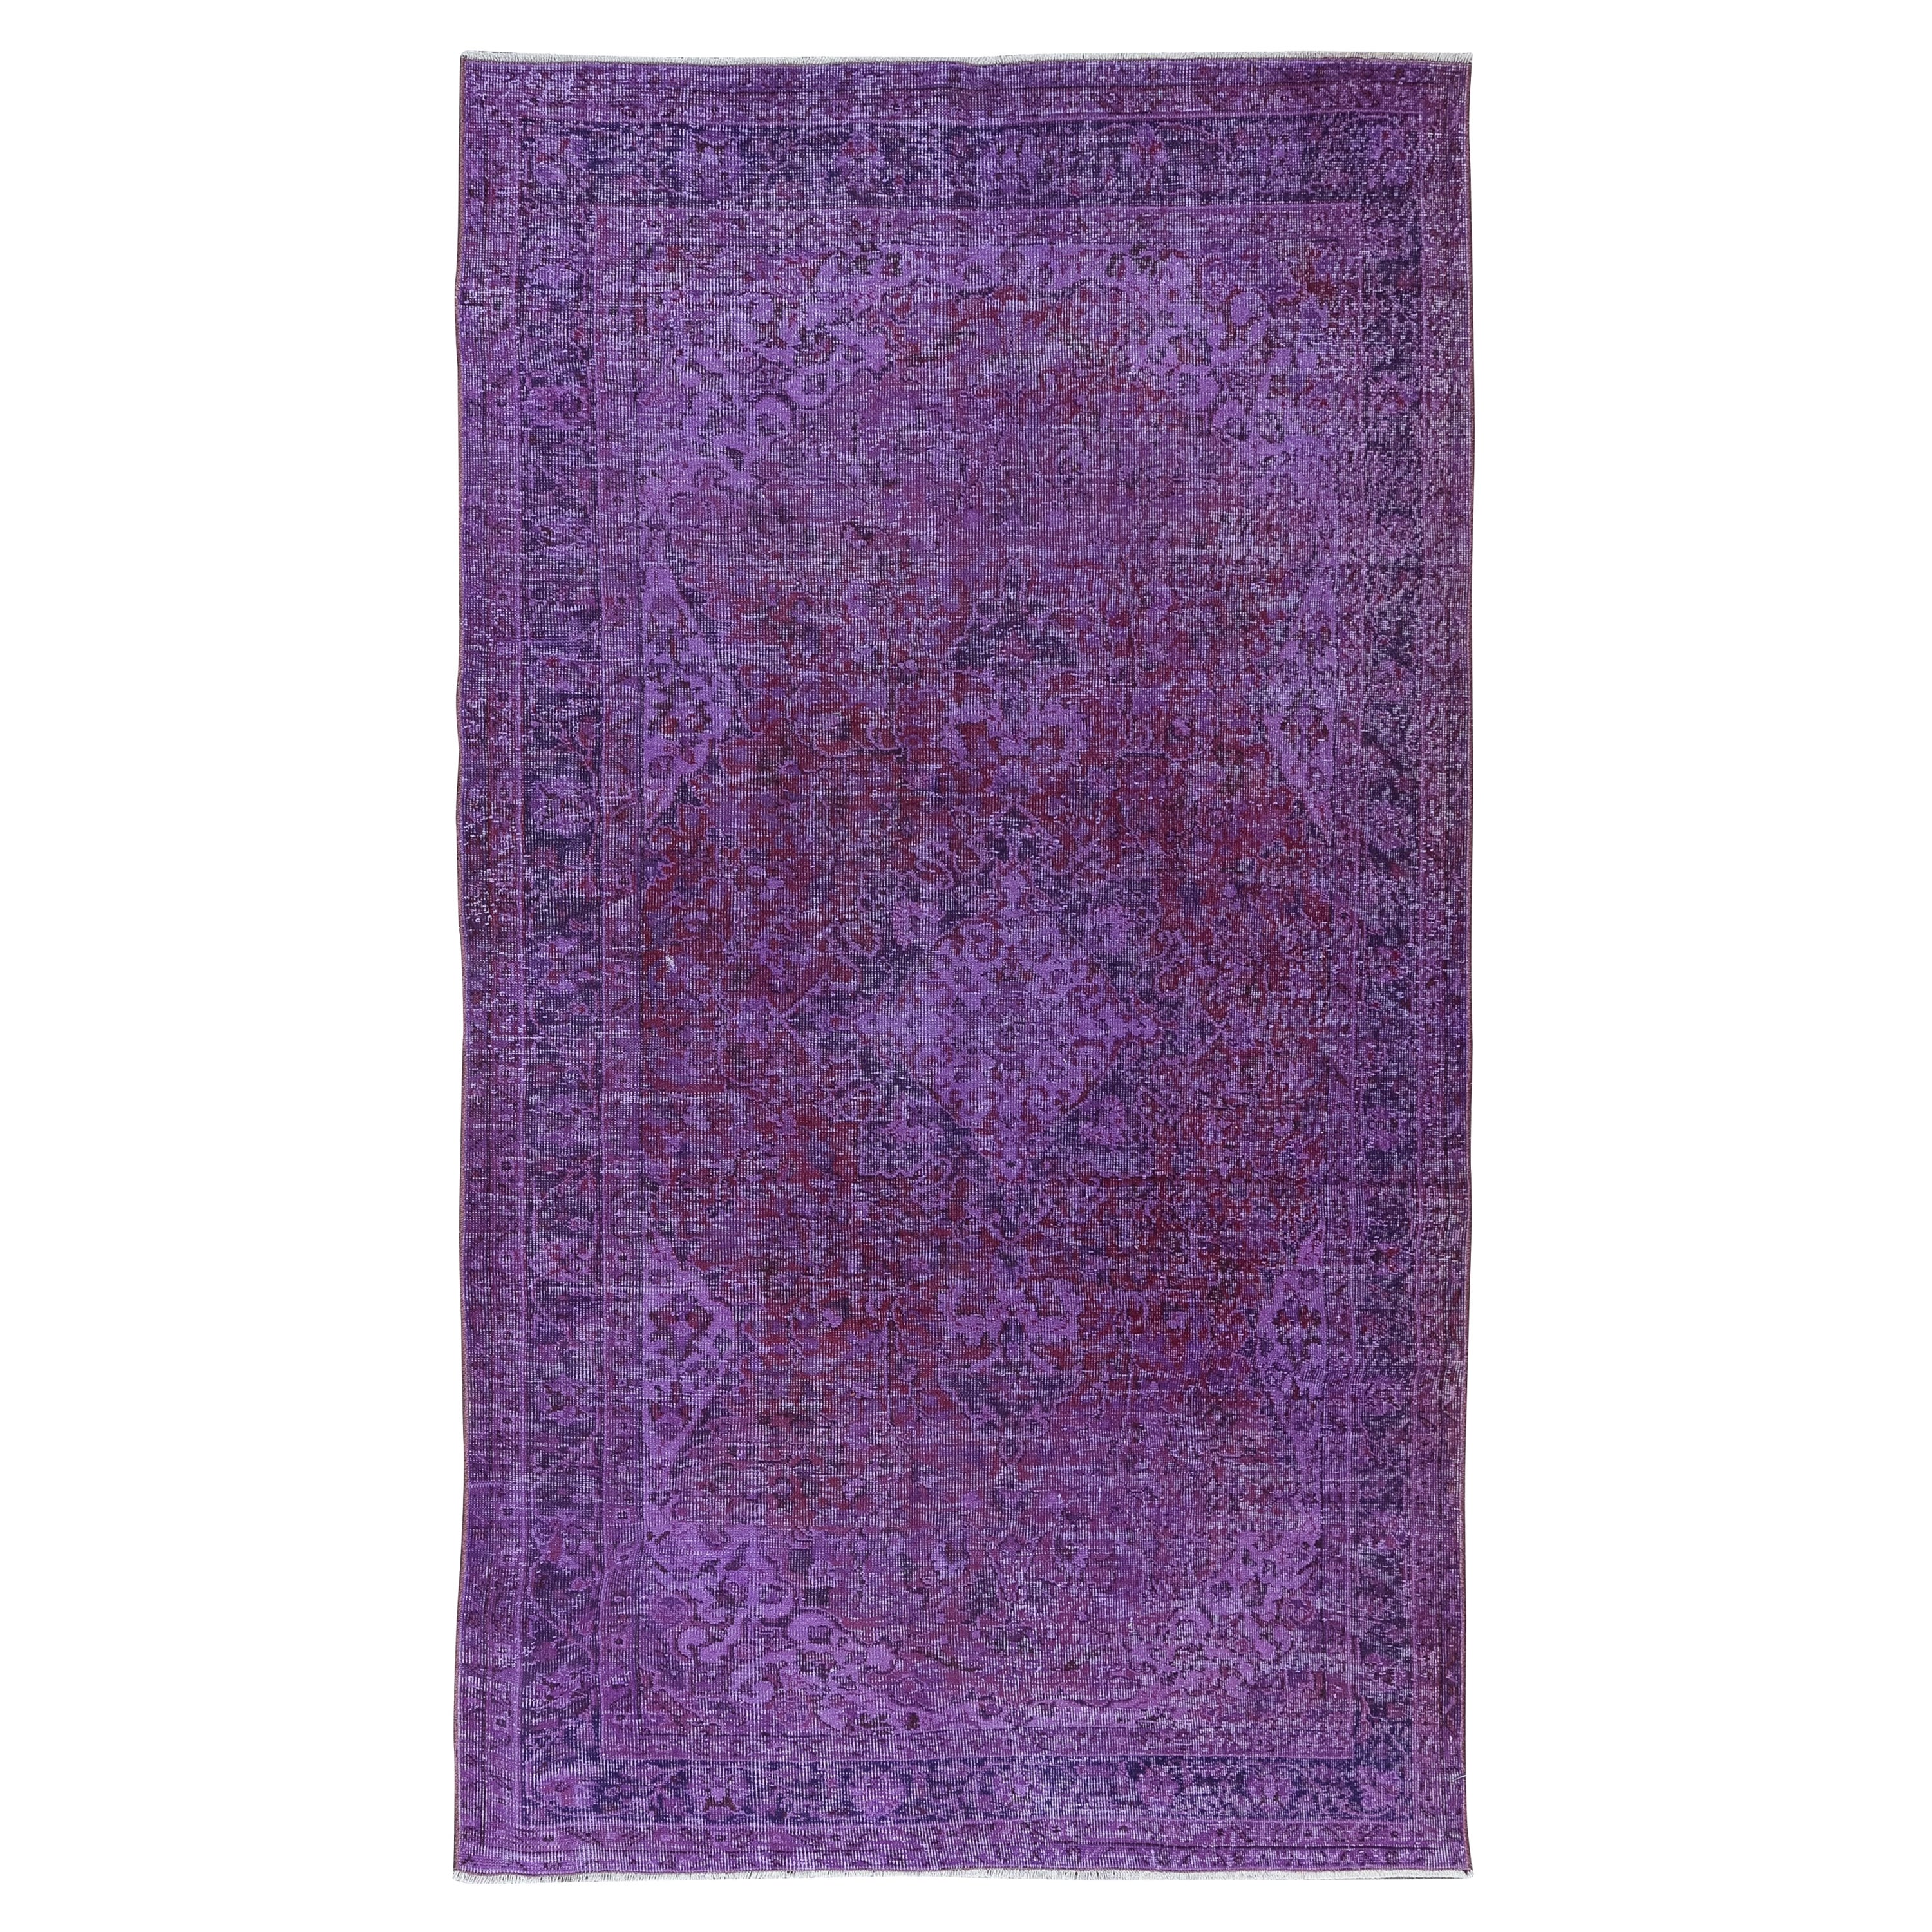 5.4x9.3 Ft Purple Handmade Wool Area Rug, Modern Turkish Carpet for Living Room For Sale